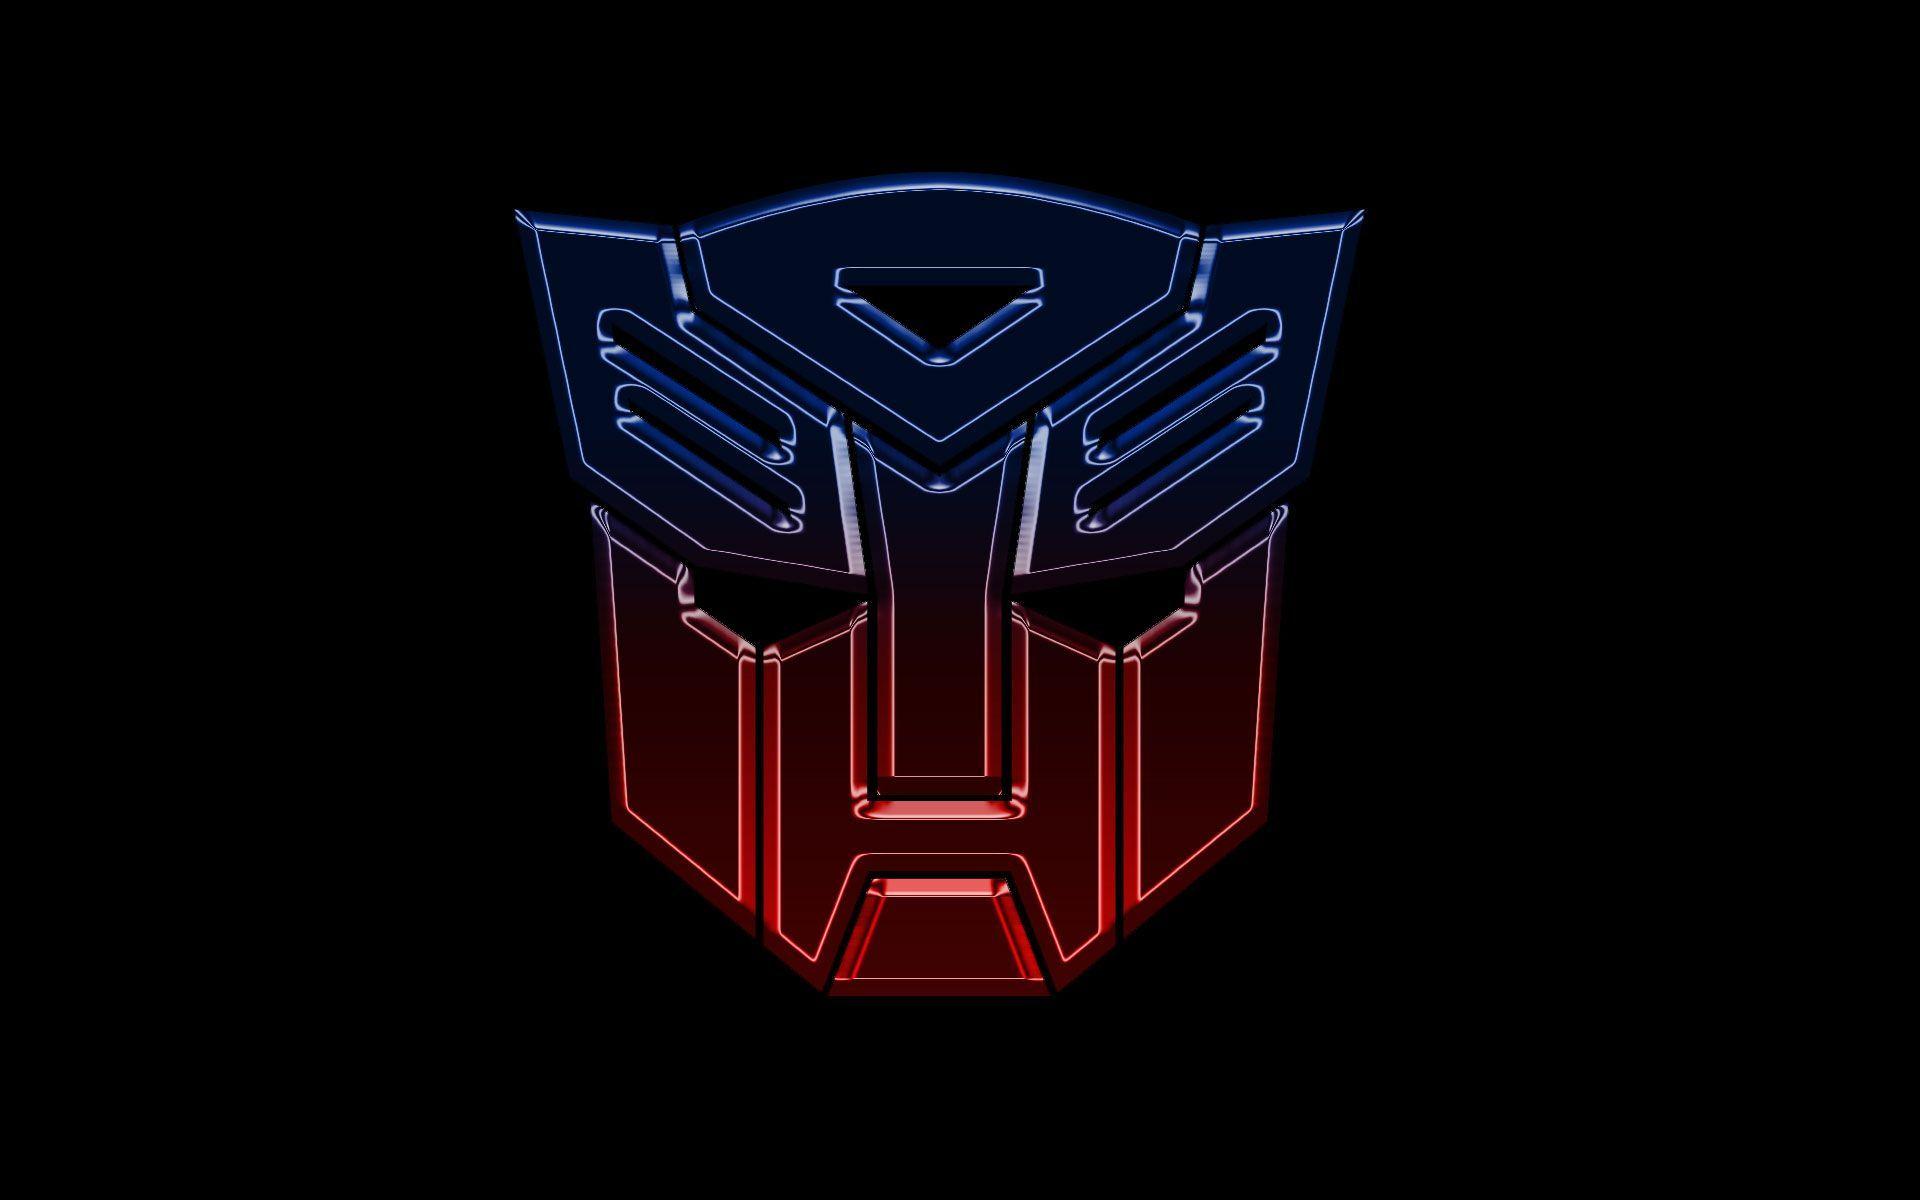 Transformers Wallpaper Autobots